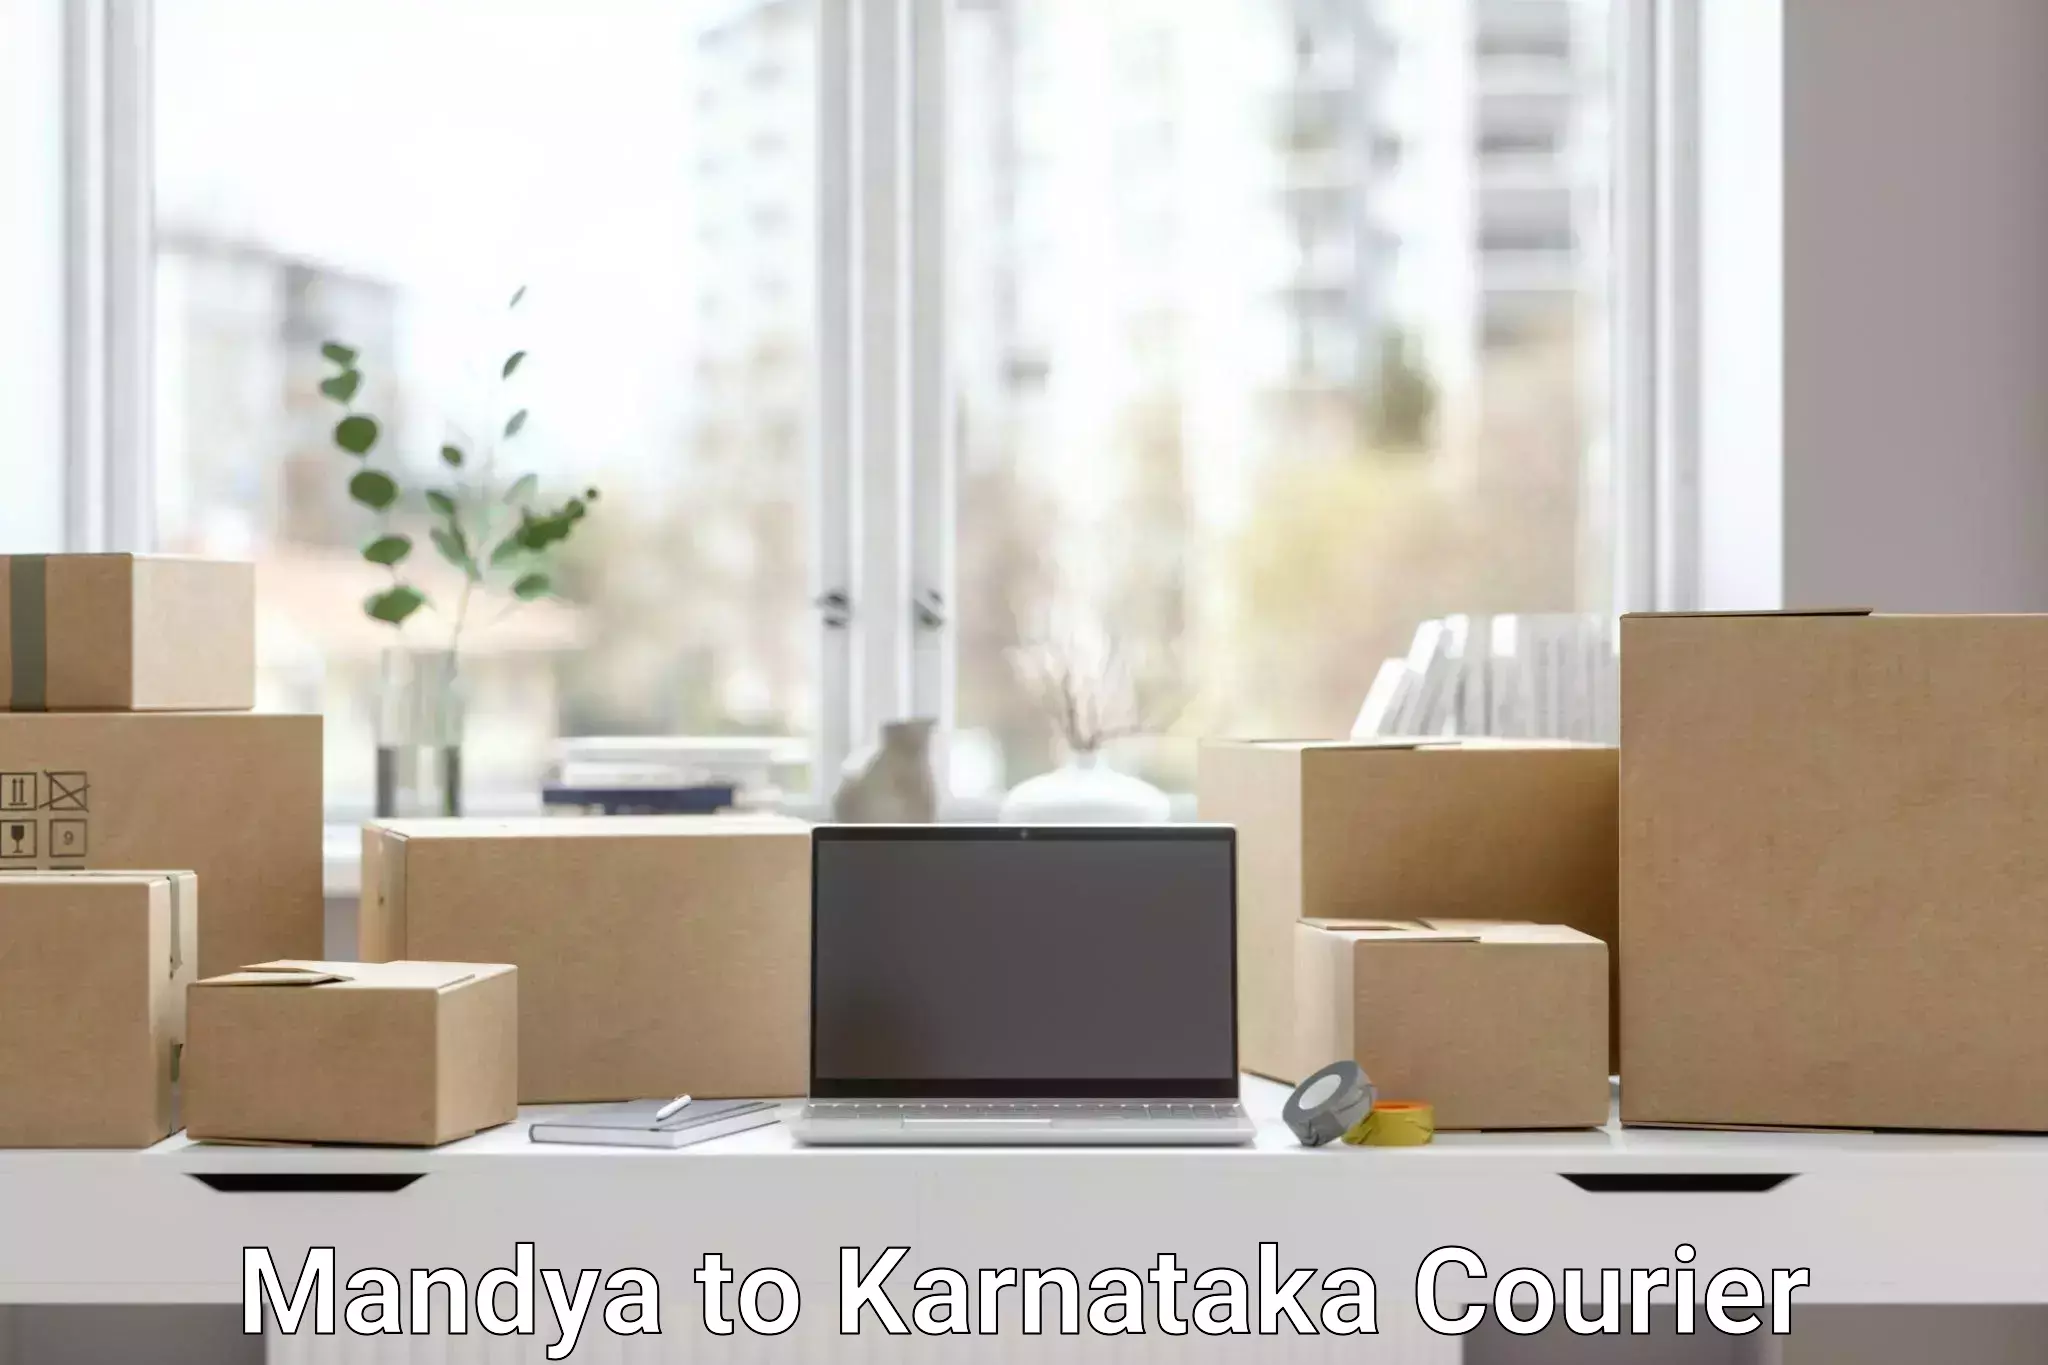 Professional courier handling Mandya to Bangalore